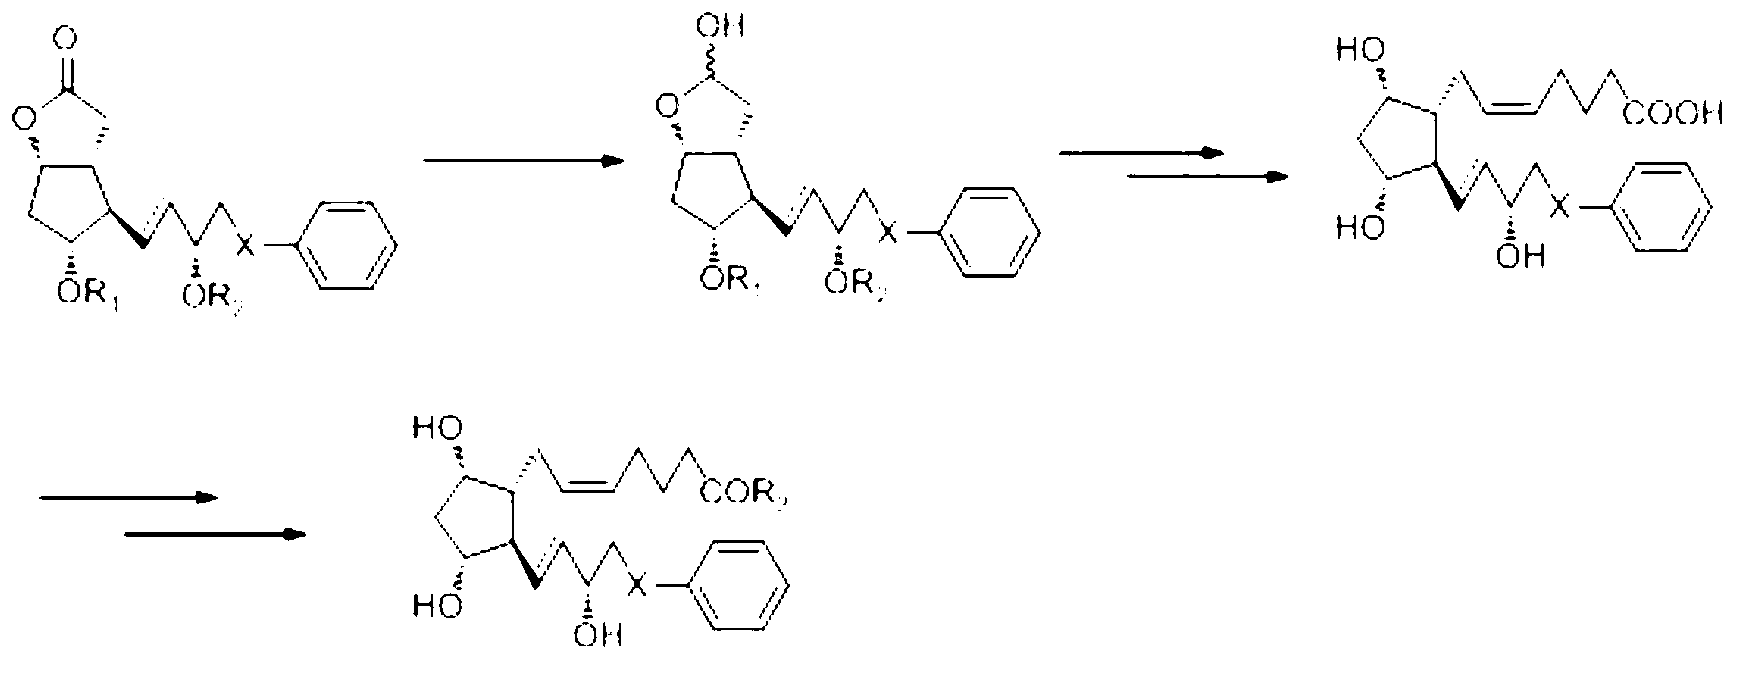 Novel method for synthetizing prostaglandin analogue